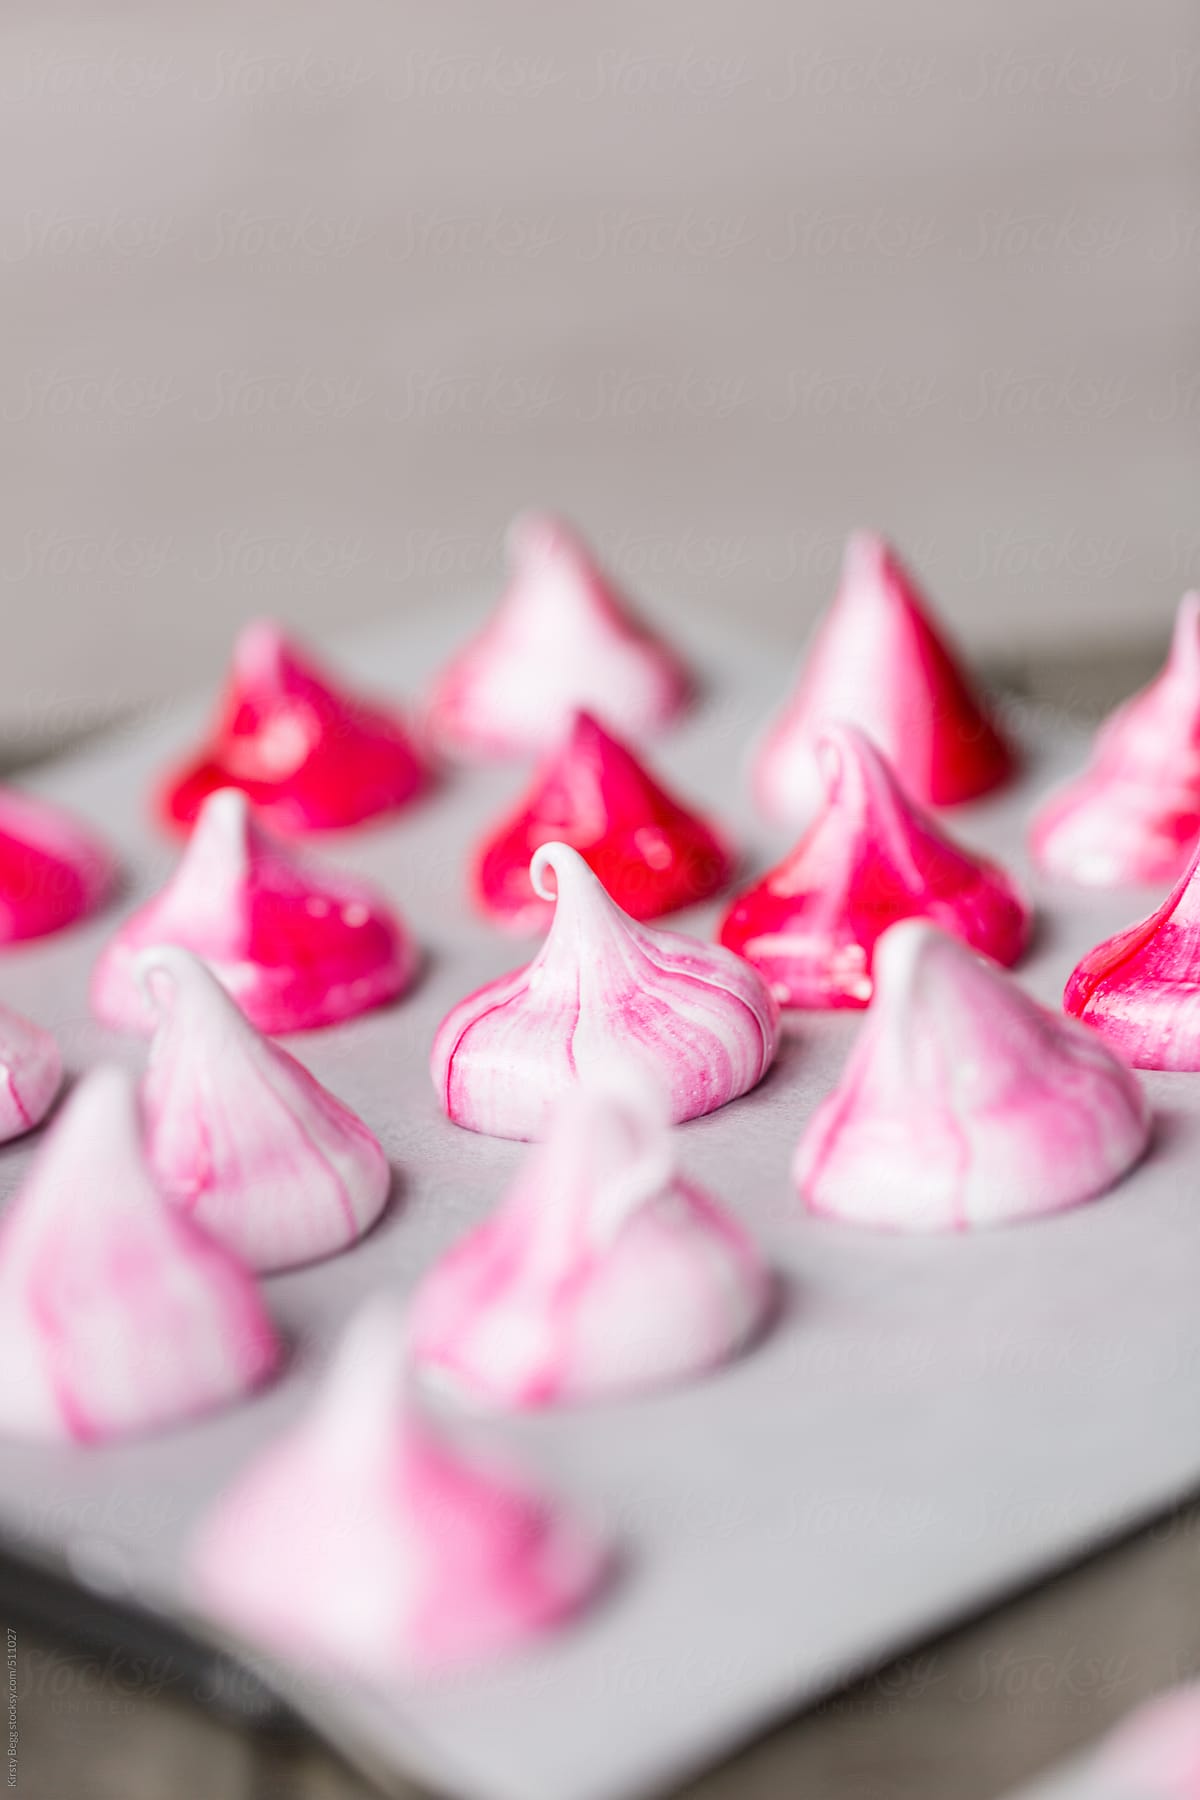 Pink meringue kisses on baking sheet